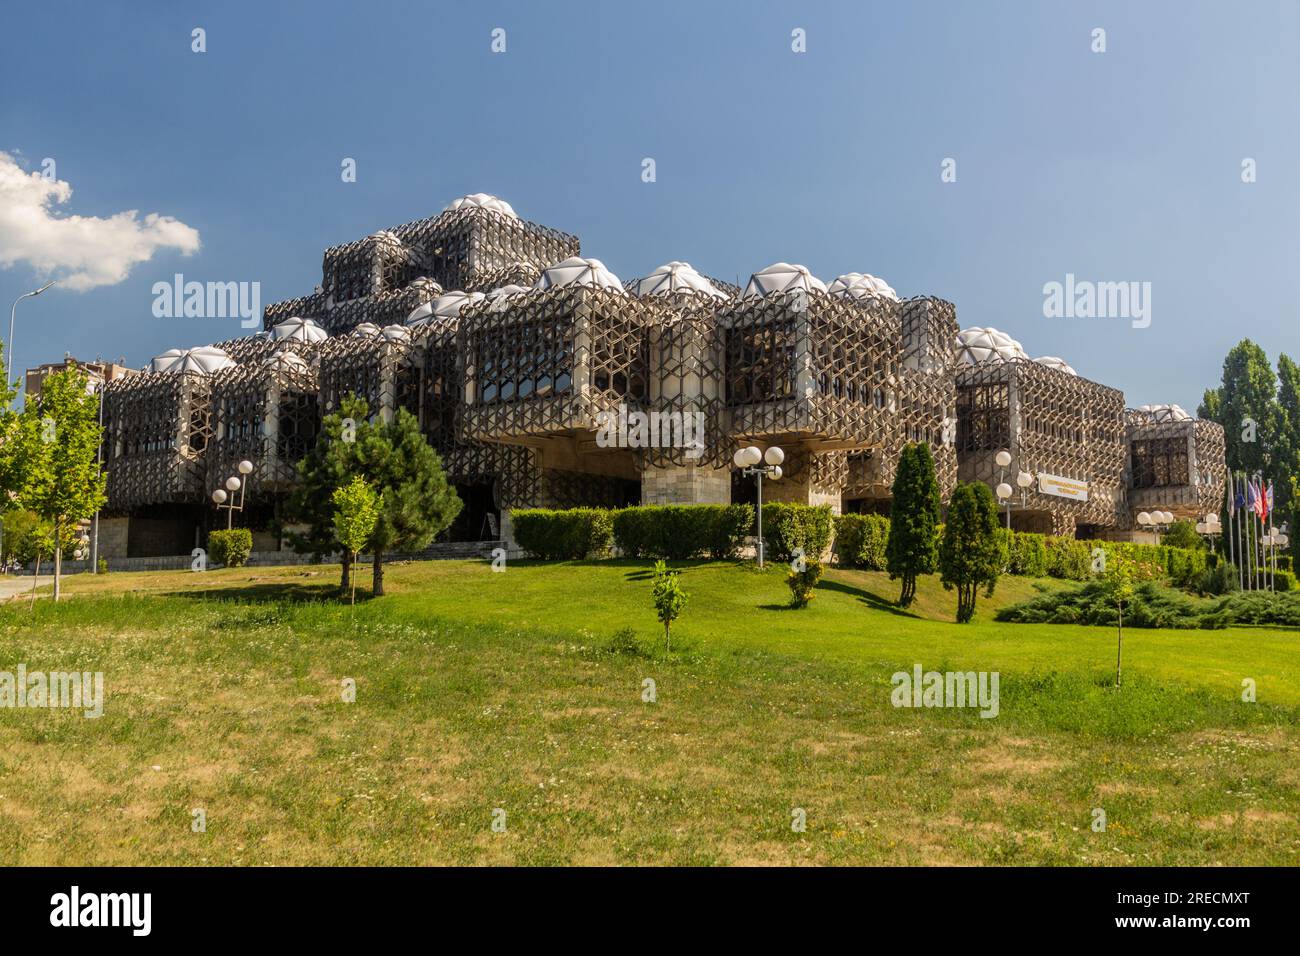 PRISTINA, KOSOVO - 13. AUGUST 2019: Nationalbibliothek des Kosovo in Pristina, Kosovo Stockfoto